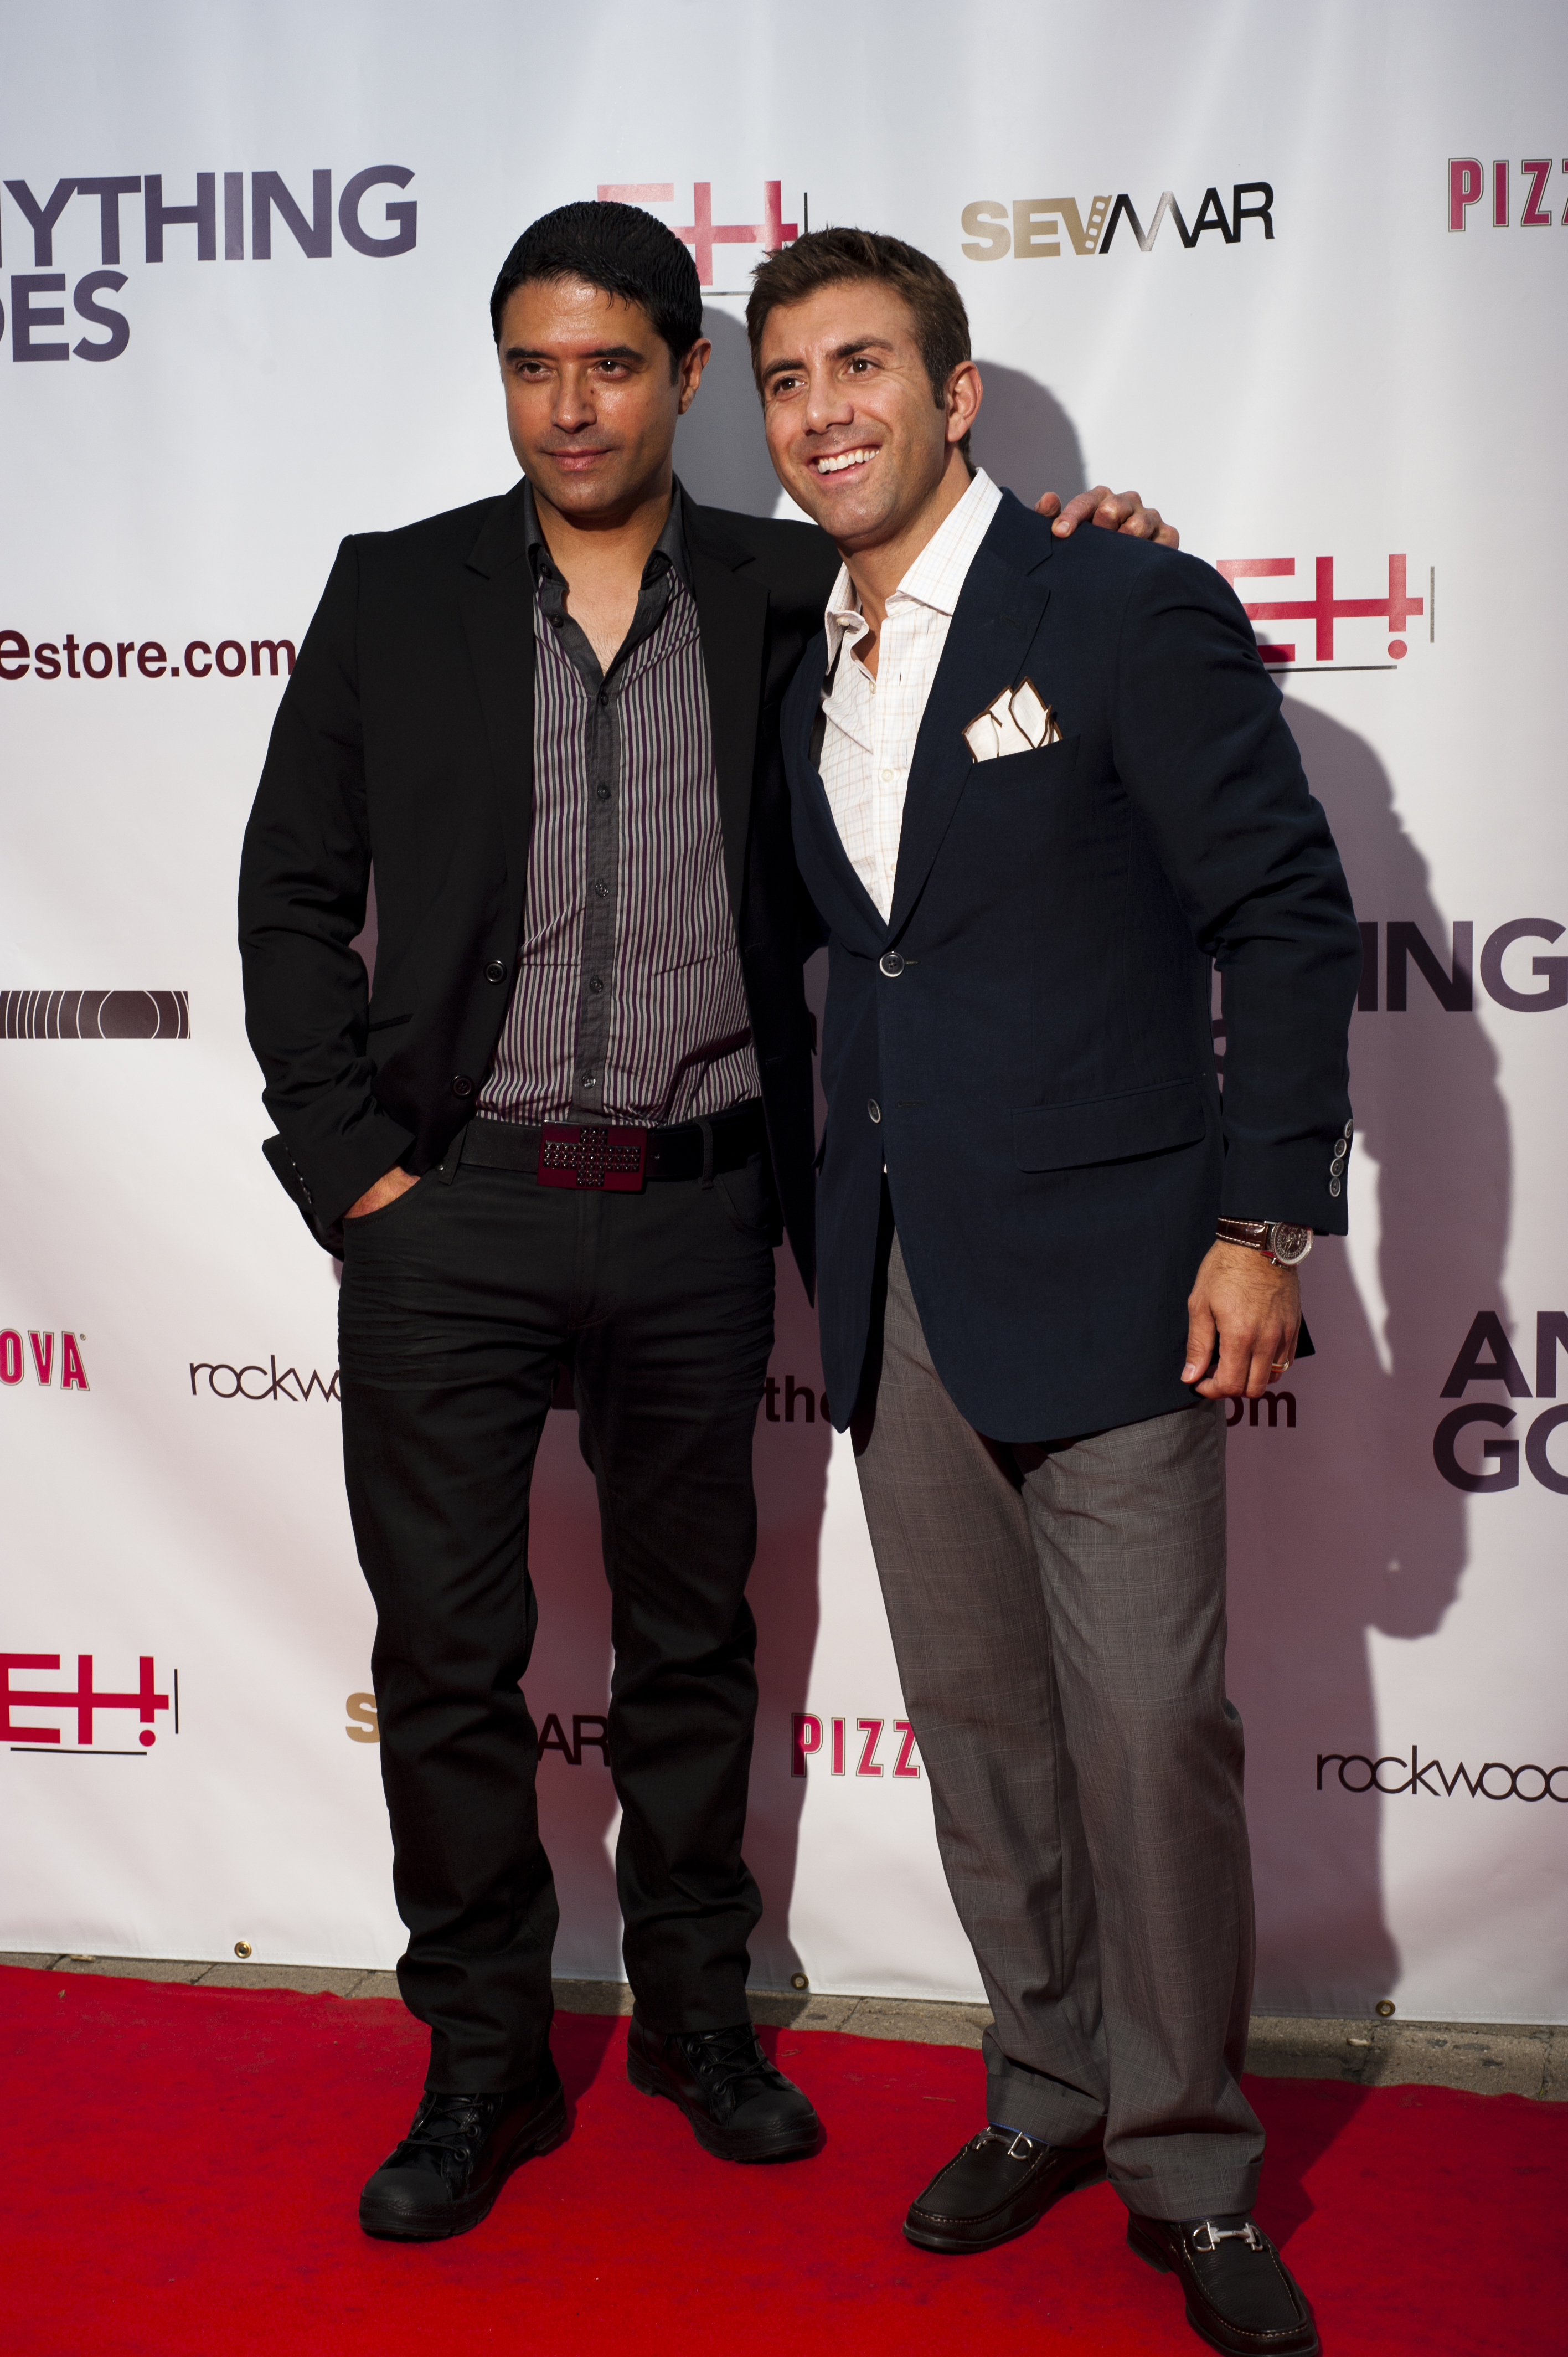 Bruno Marino and Nicolas J Severino at the Premiere of Anything Goes